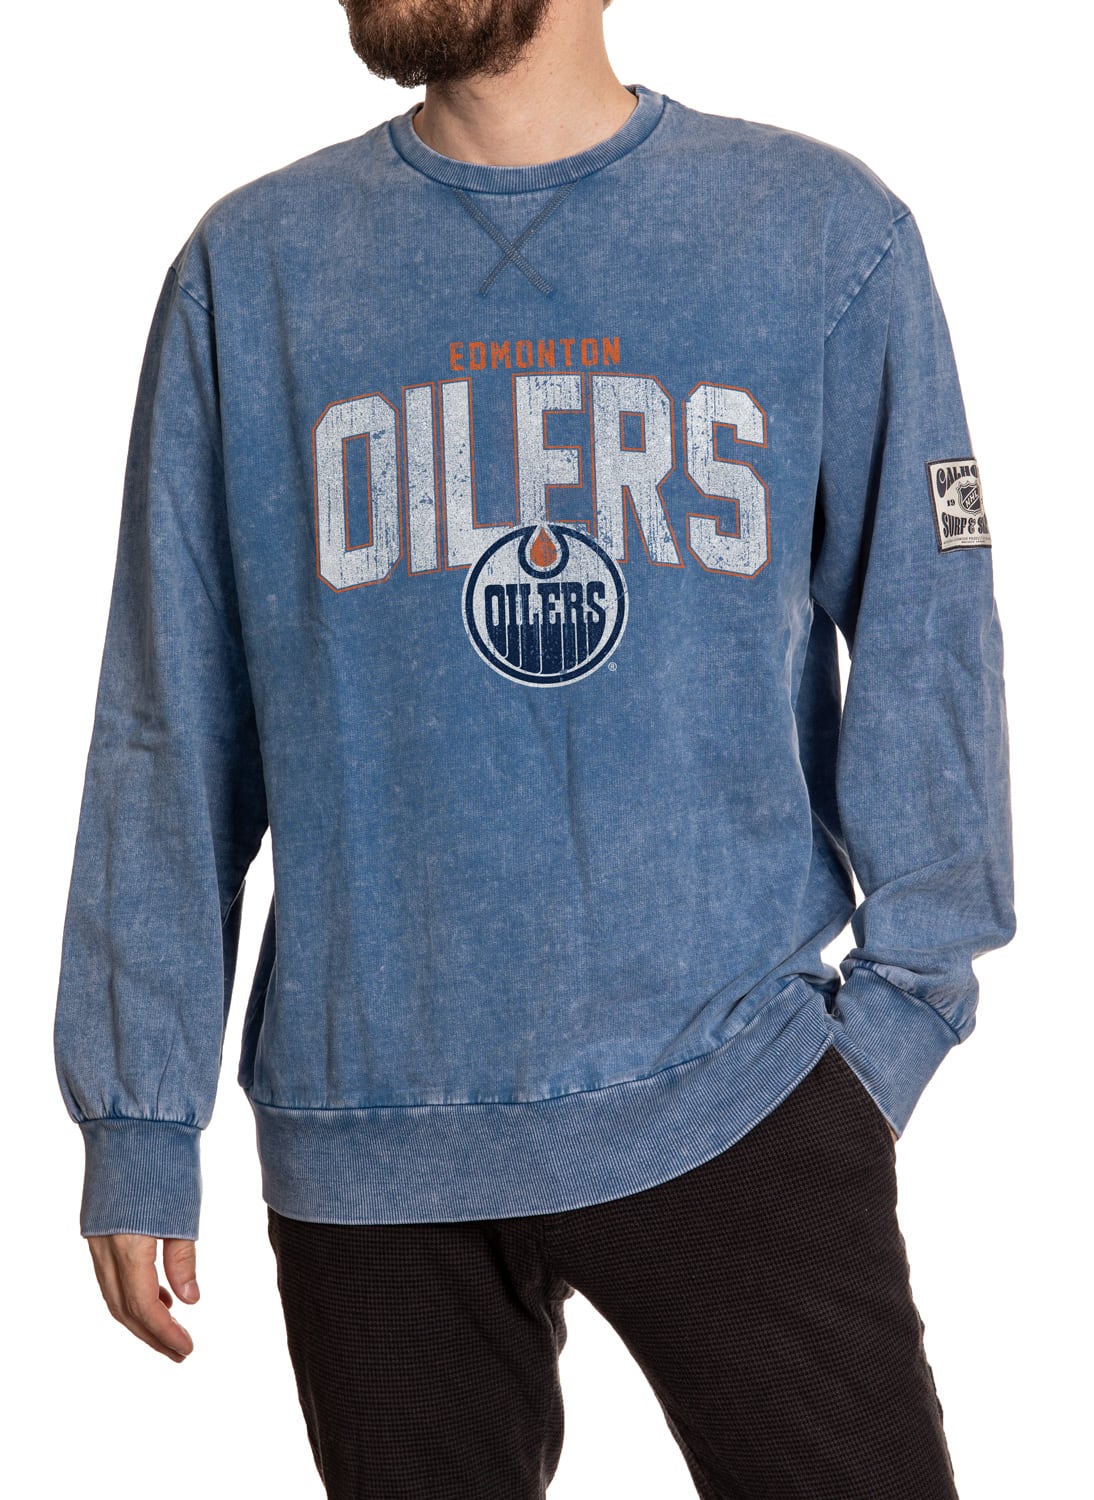 Edmonton Oilers Acid Wash Crewneck in Blue Front View